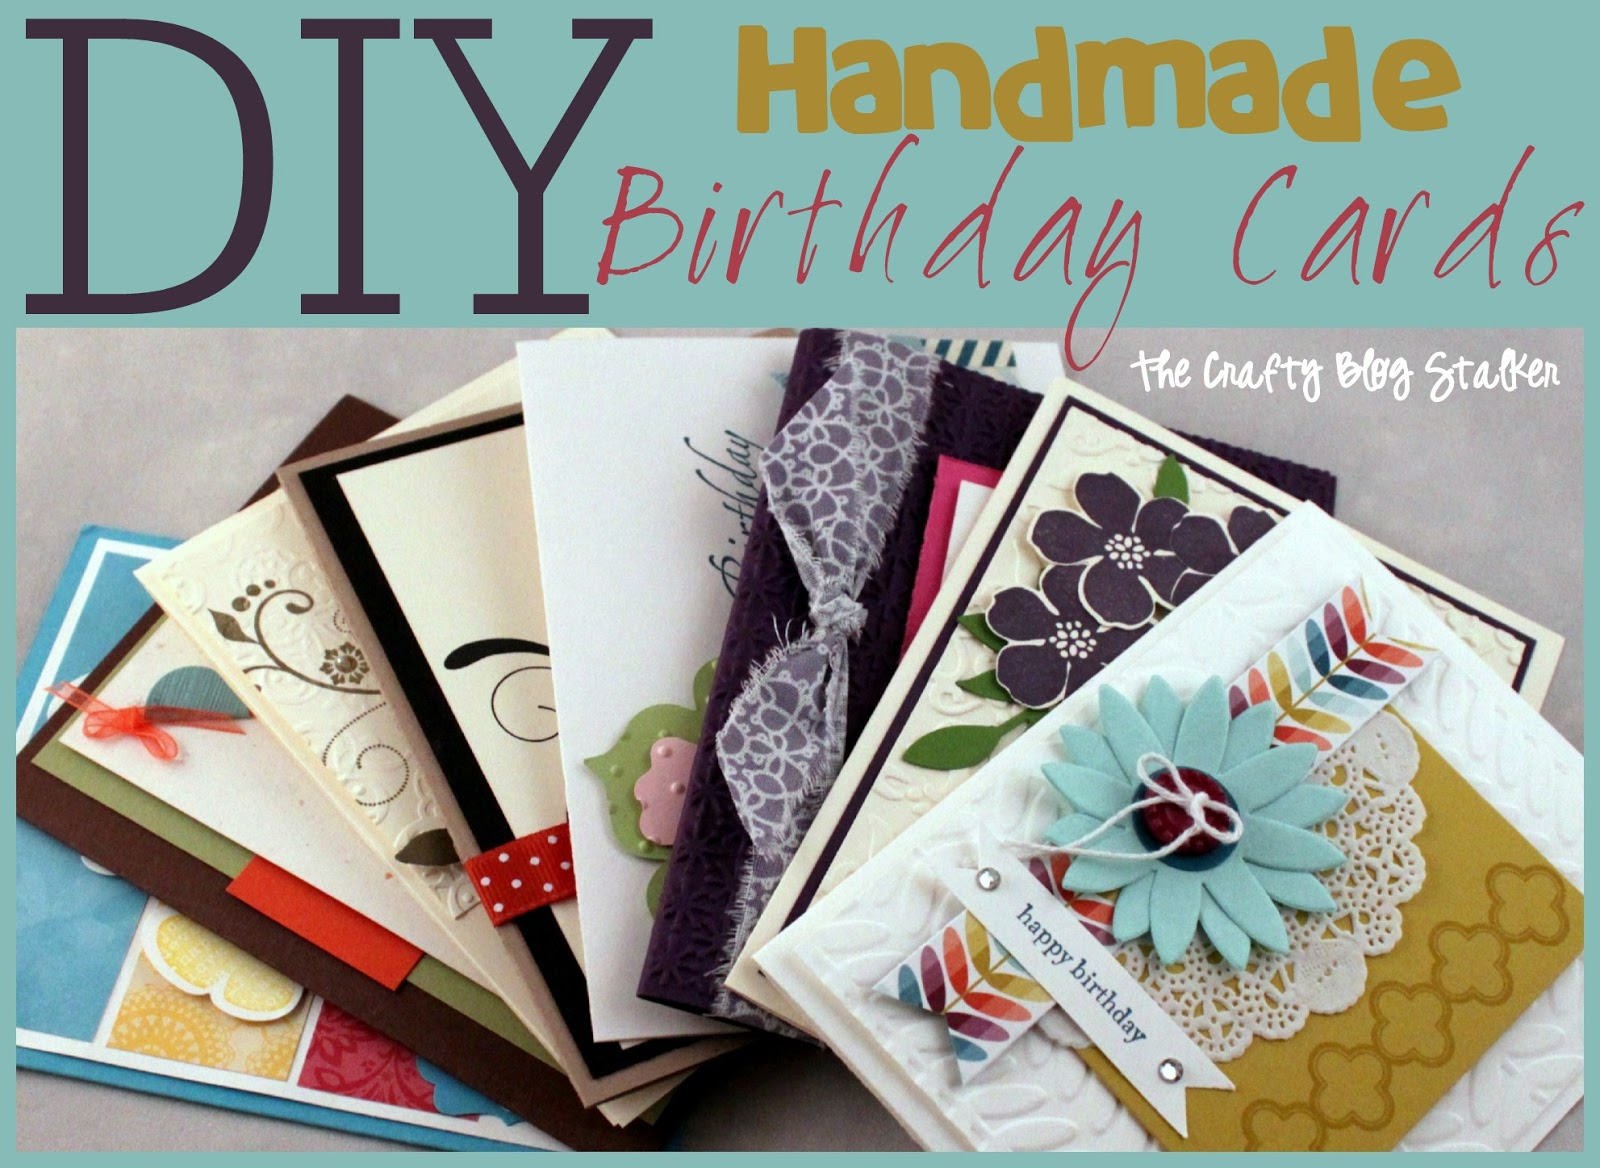 Cool Easy Birthday Card Ideas Handmade Birthday Card Ideas The Crafty Blog Stalker